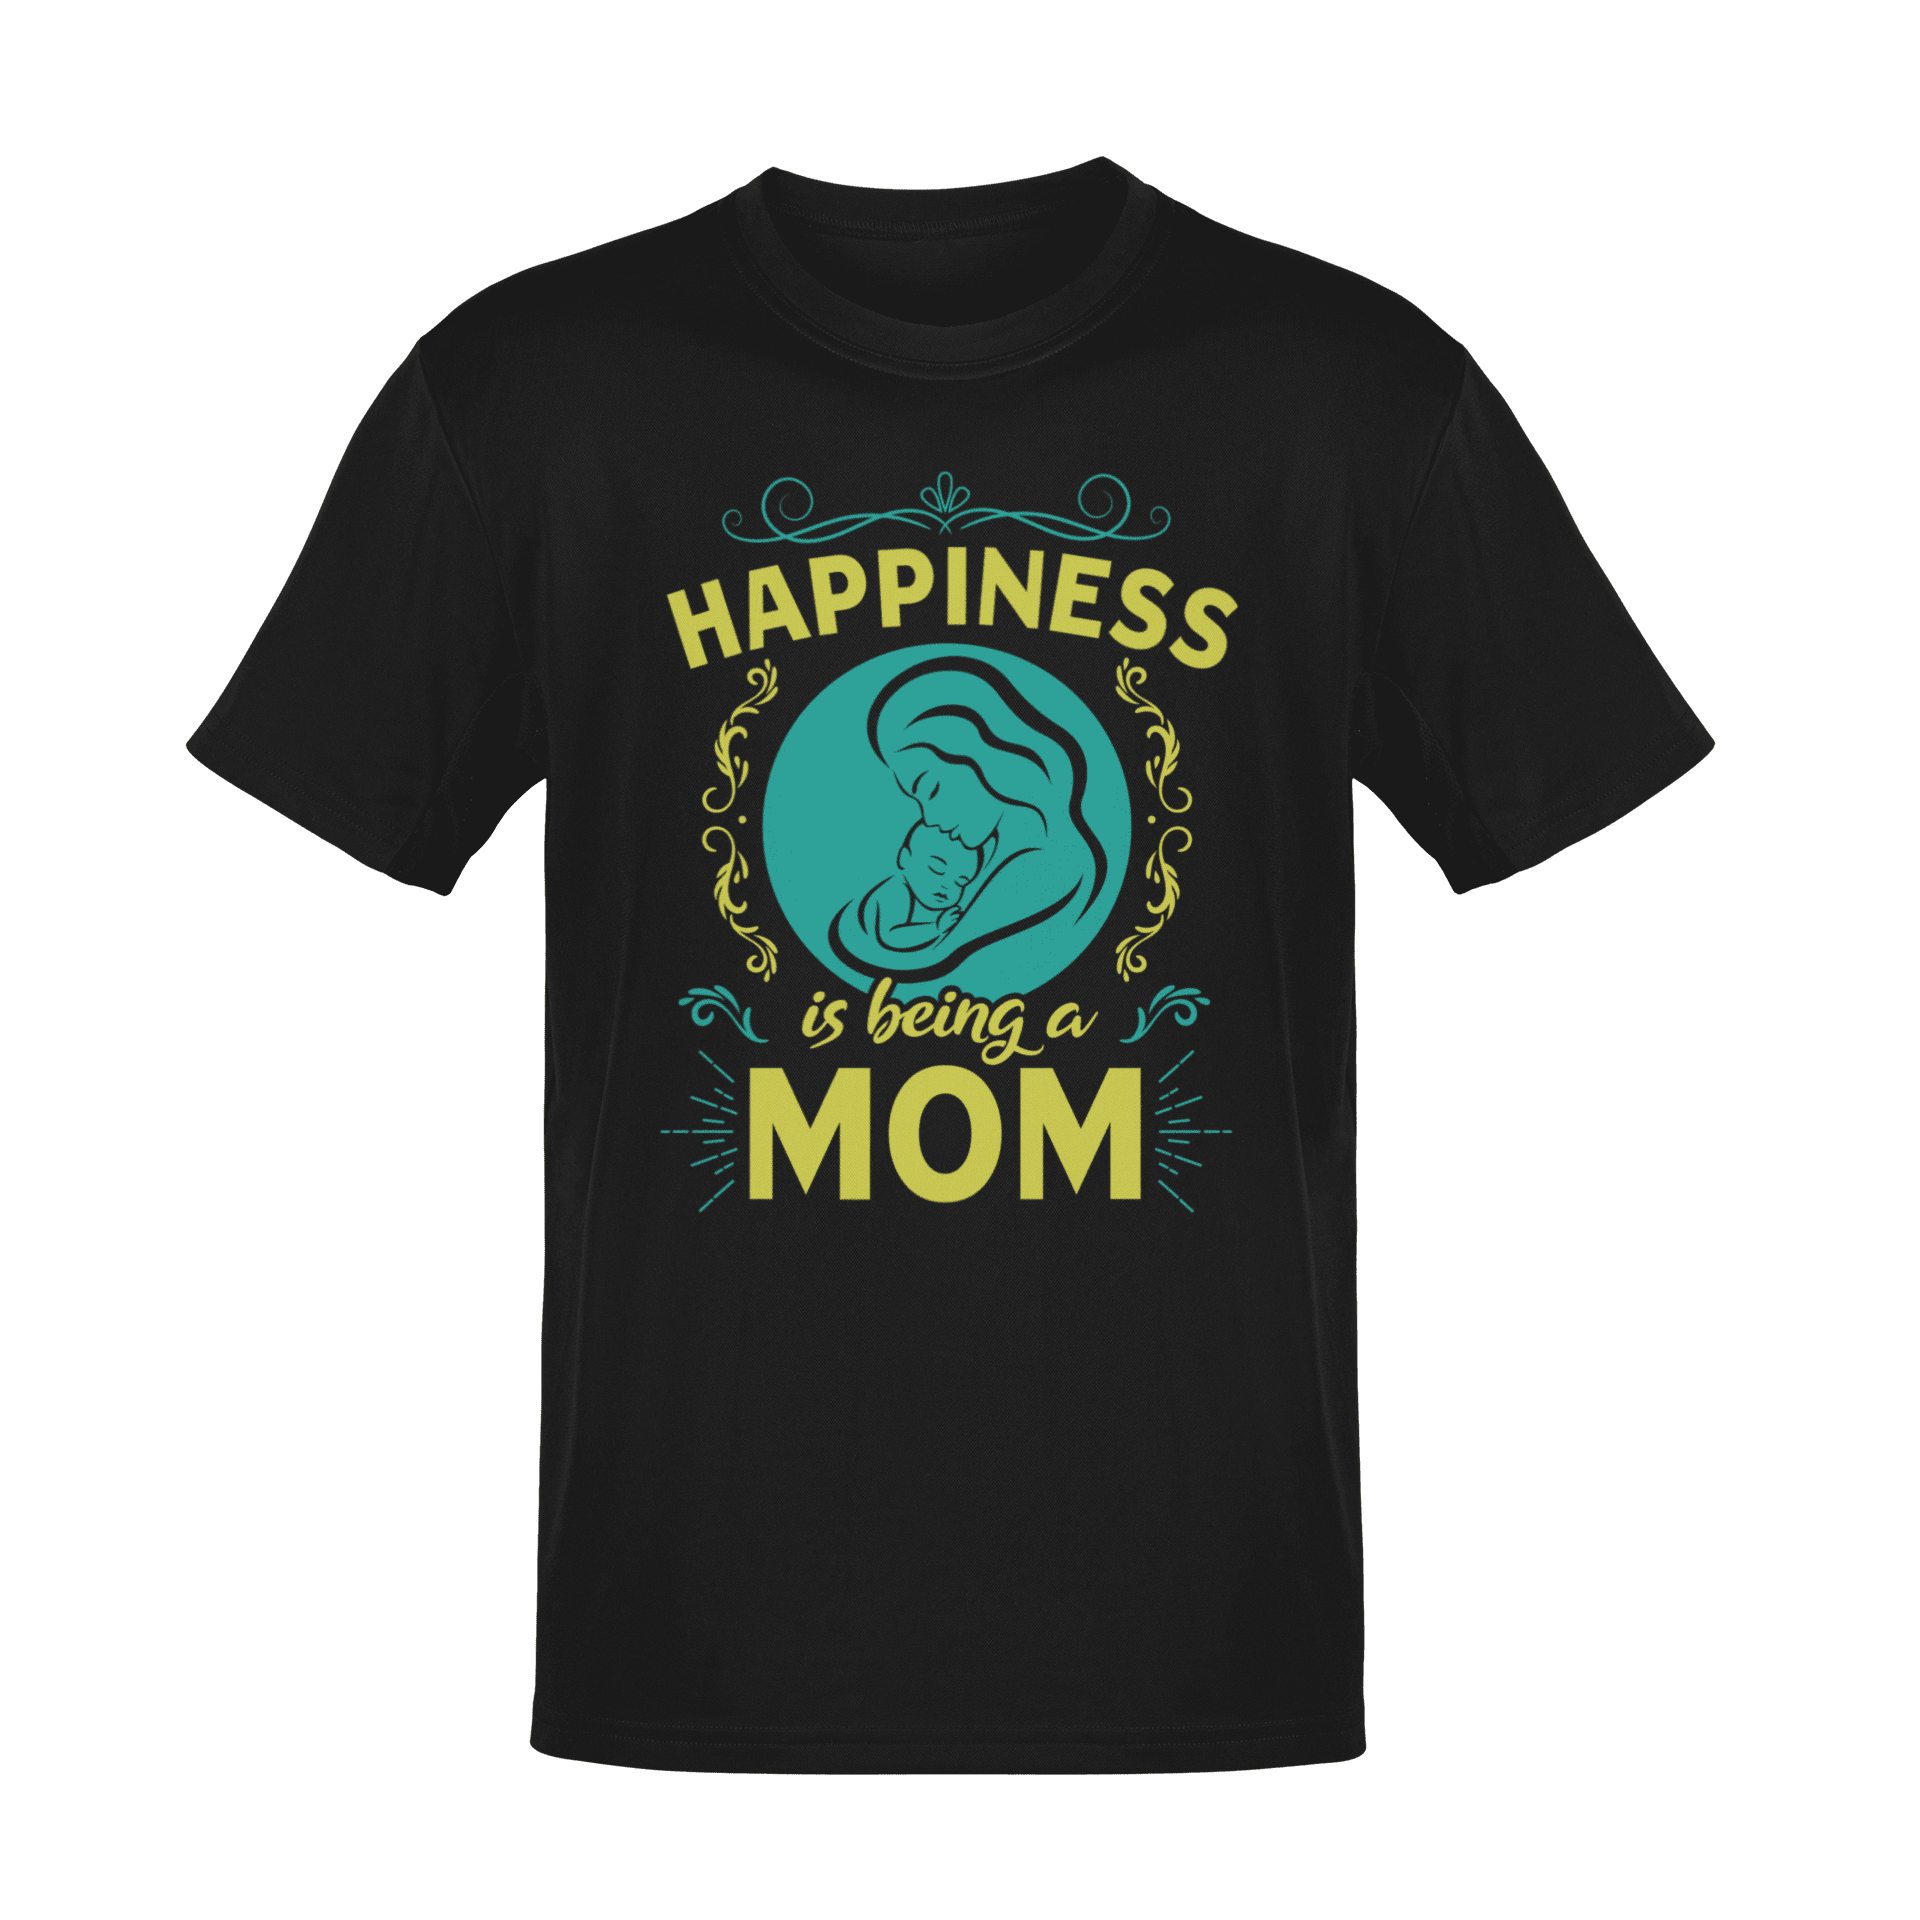 Happy mom